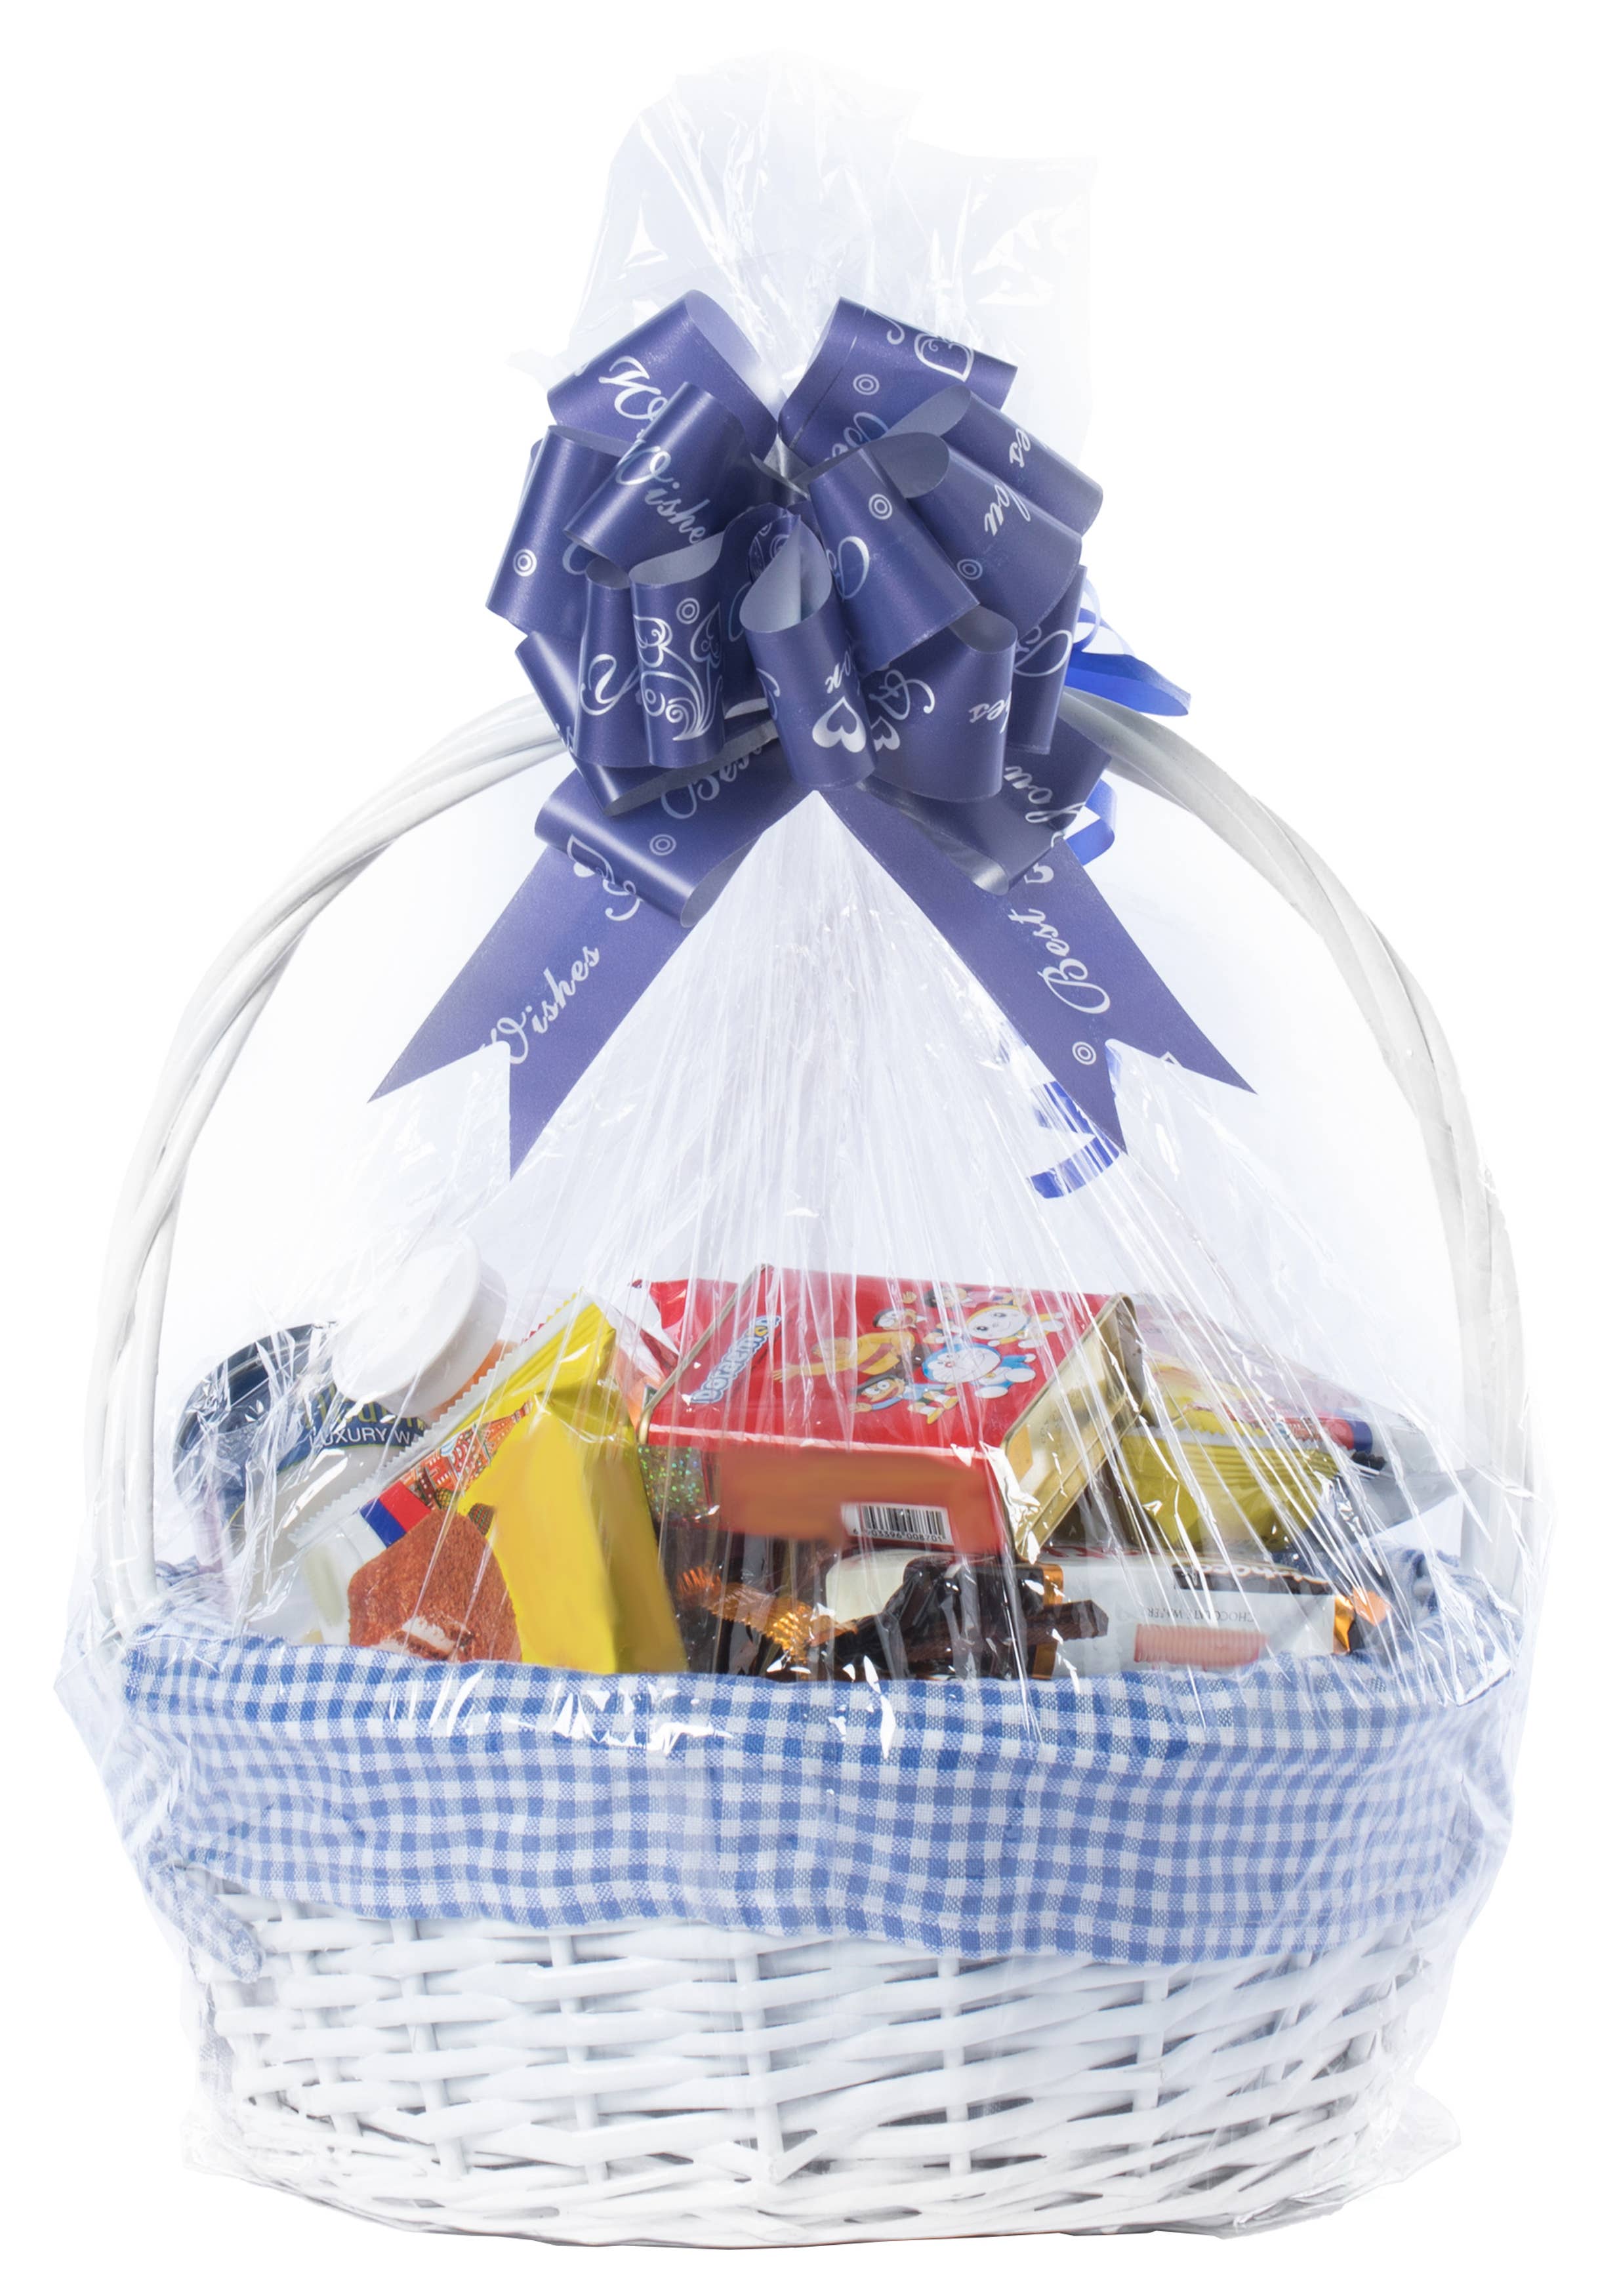 wholesale square gift hamper basket with| Alibaba.com